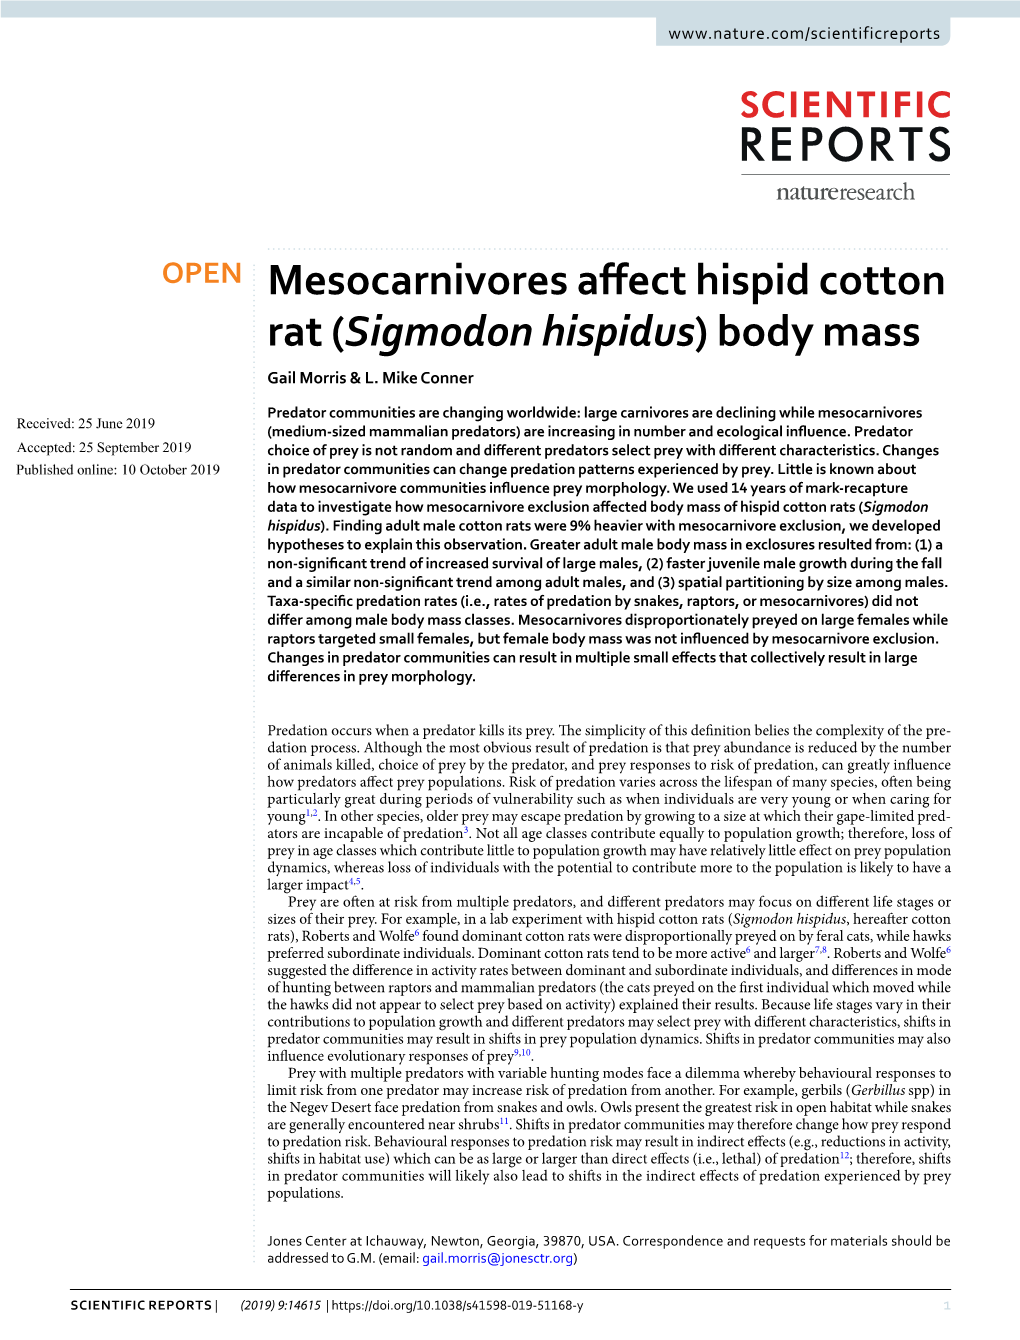 Mesocarnivores Affect Hispid Cotton Rat (Sigmodon Hispidus) Body Mass